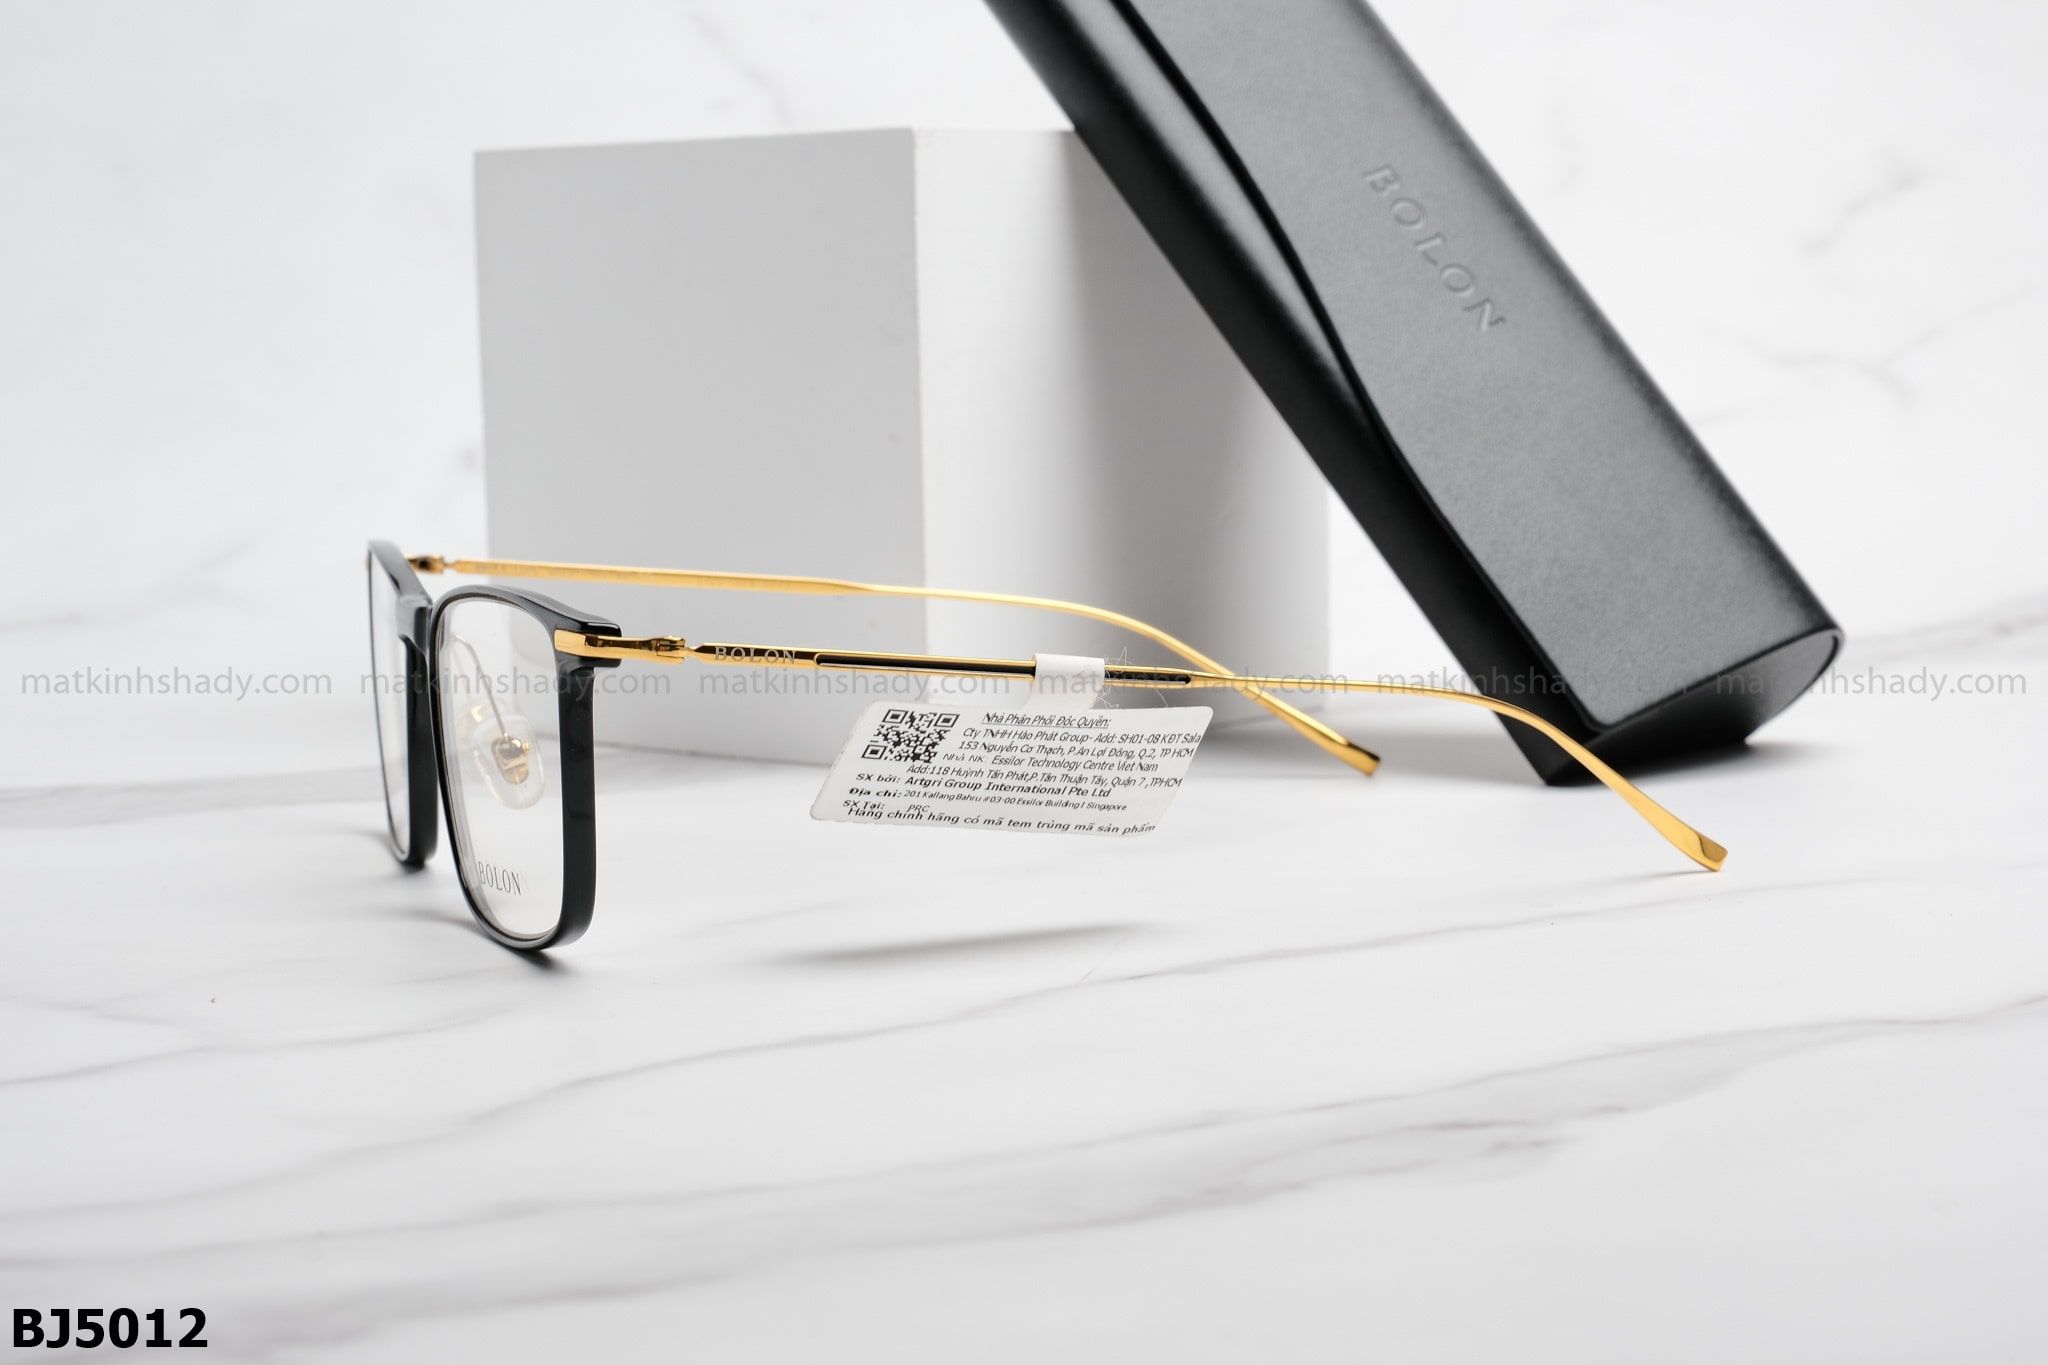  Bolon Eyewear - Glasses - BJ5012 